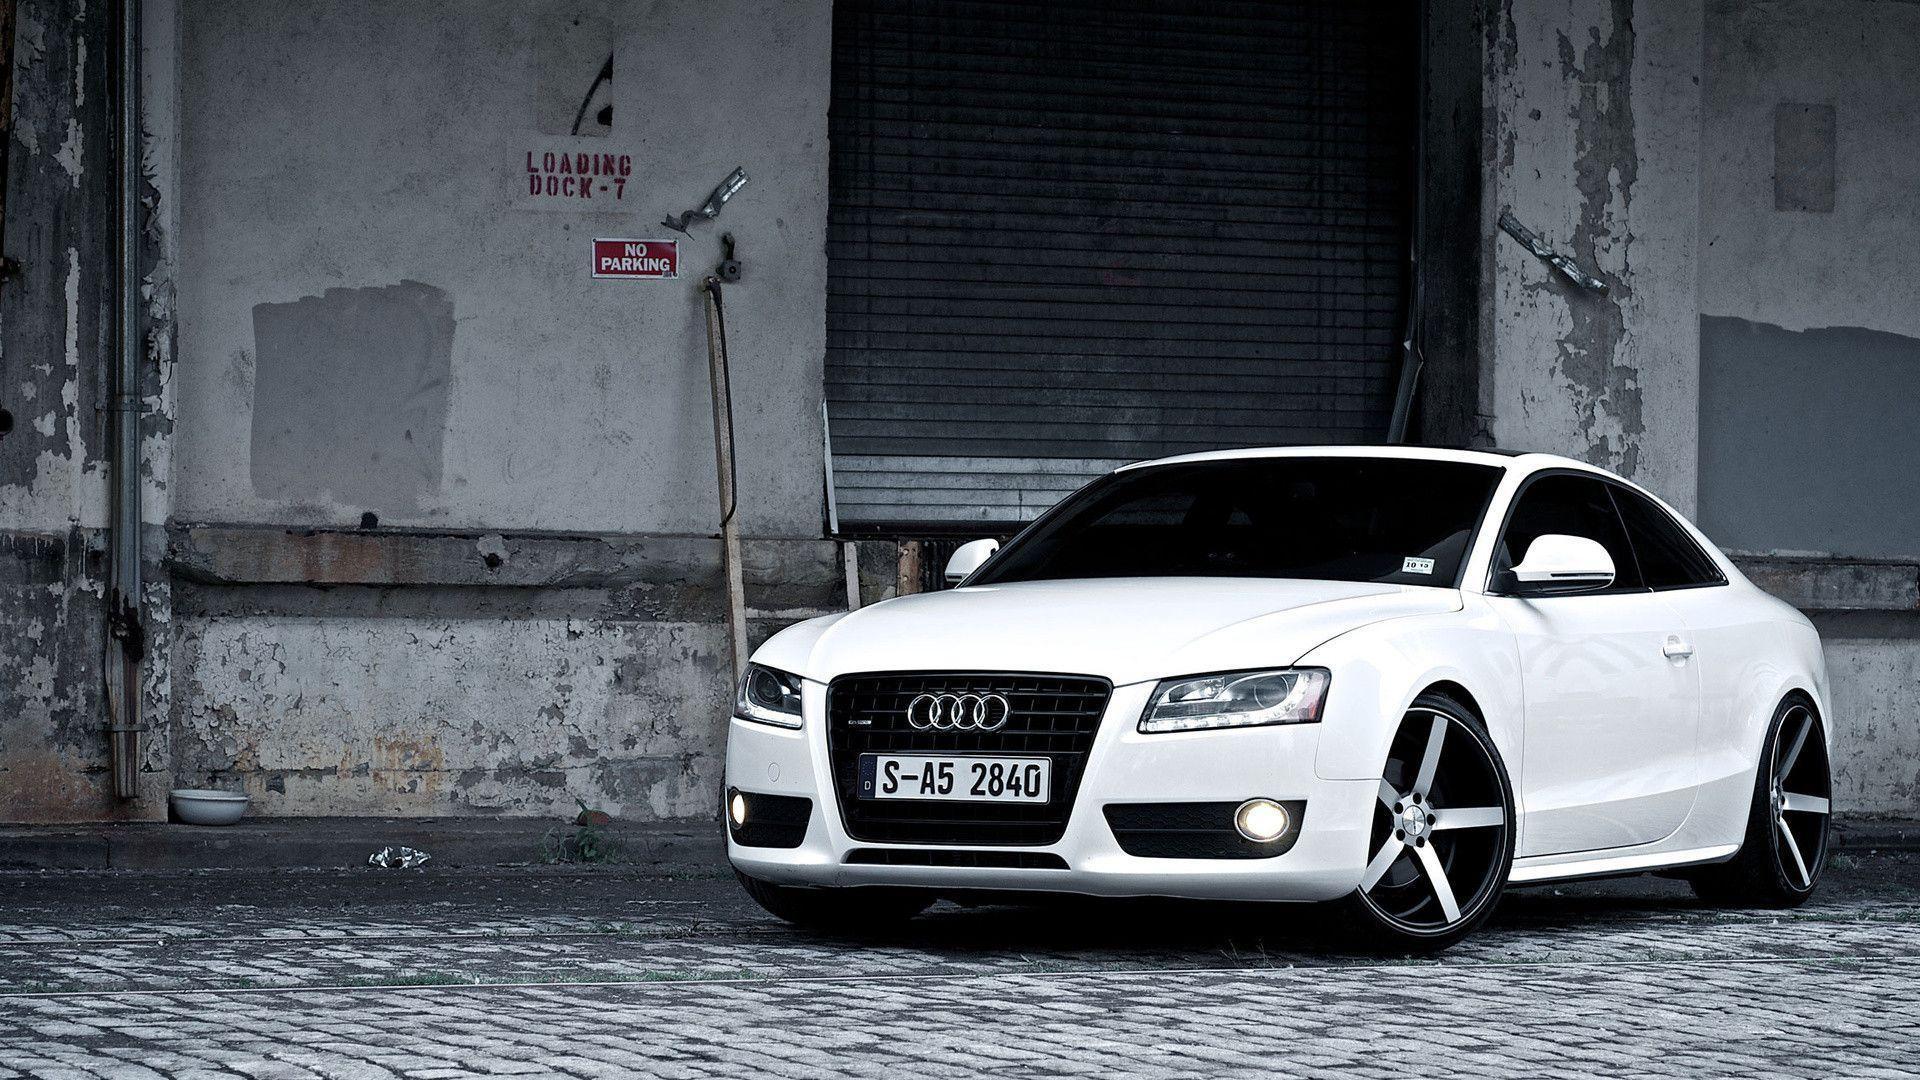 Fonds d&;écran Audi A5, tous les wallpaper Audi A5